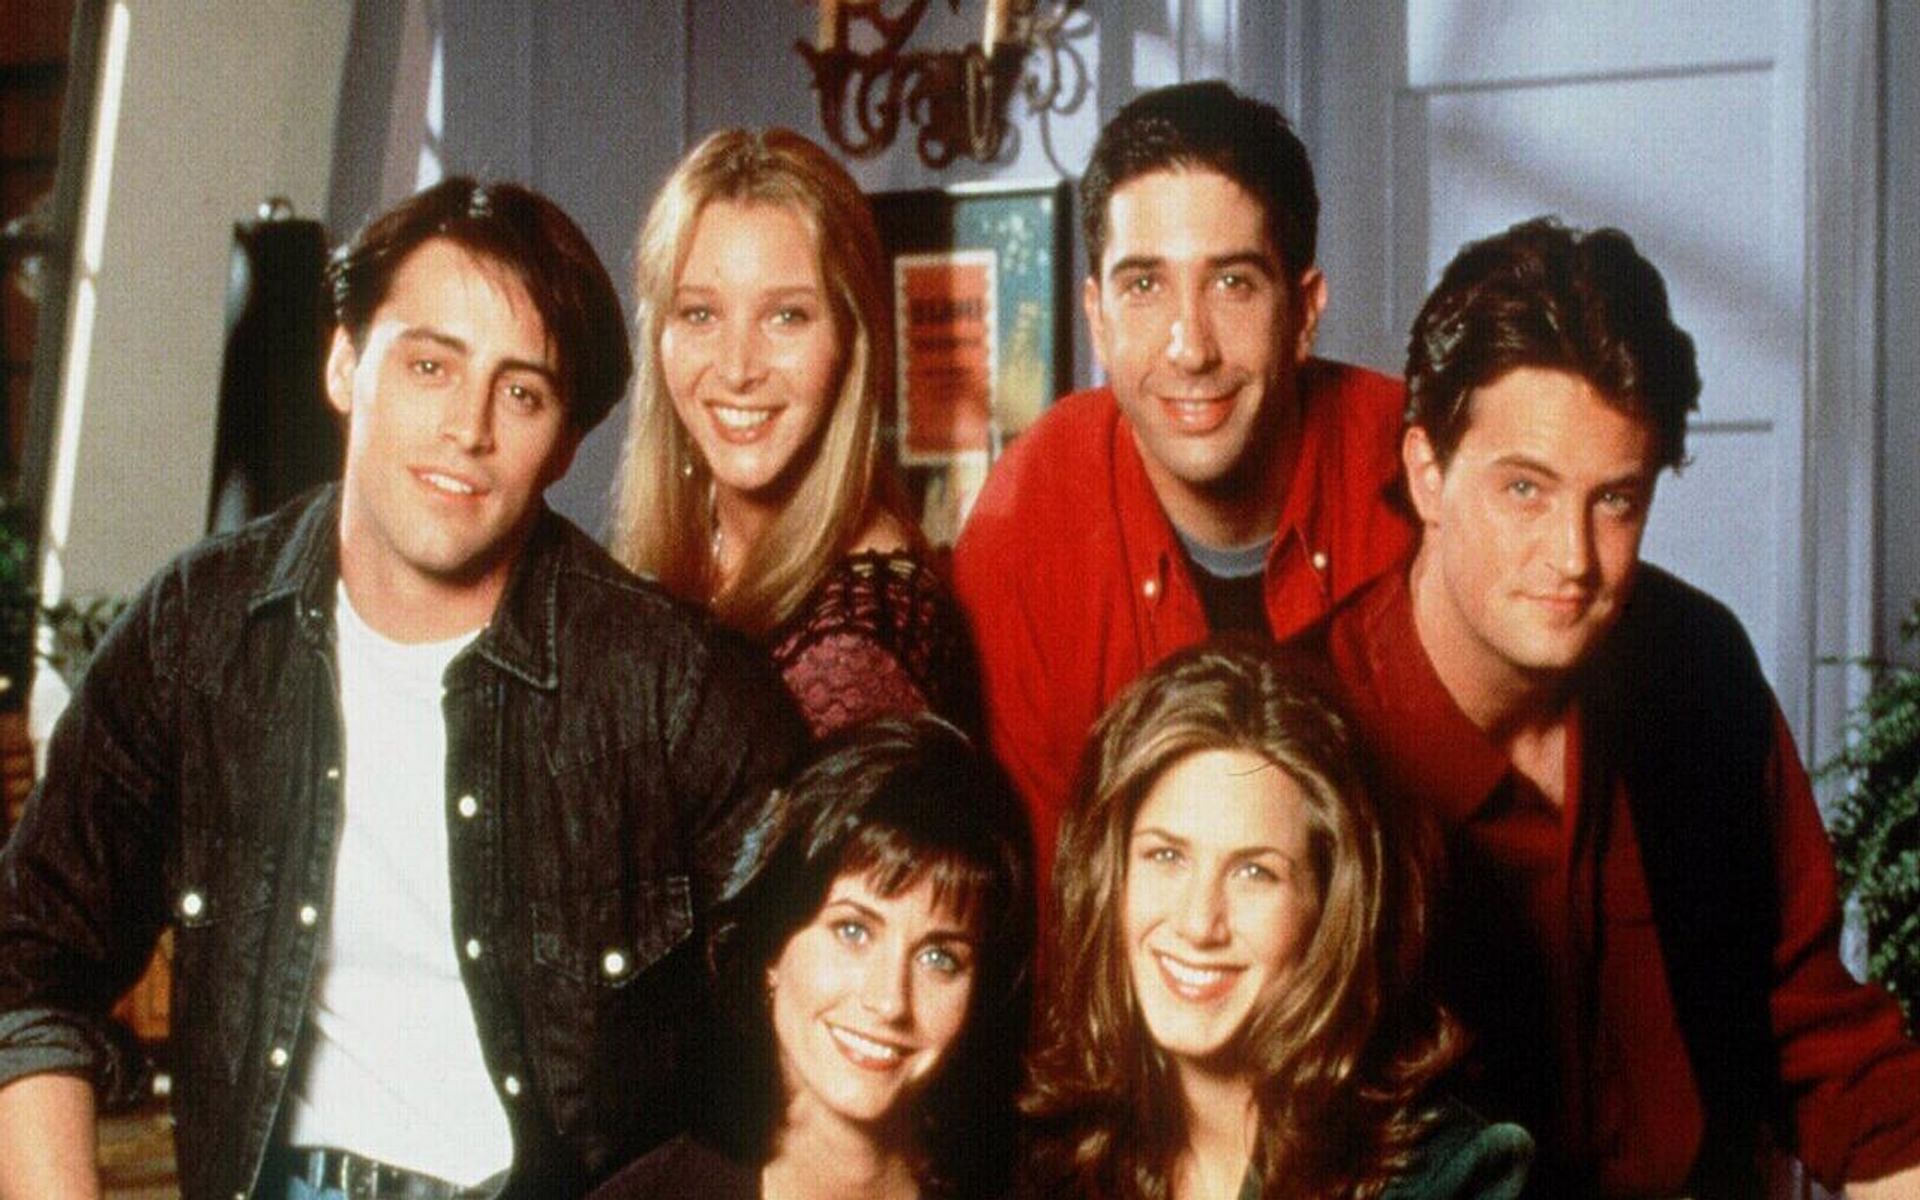 Cast of Friends - Joey, Phoebe, Ross, Monica, Rachel and Chandler (Image via IMDb)